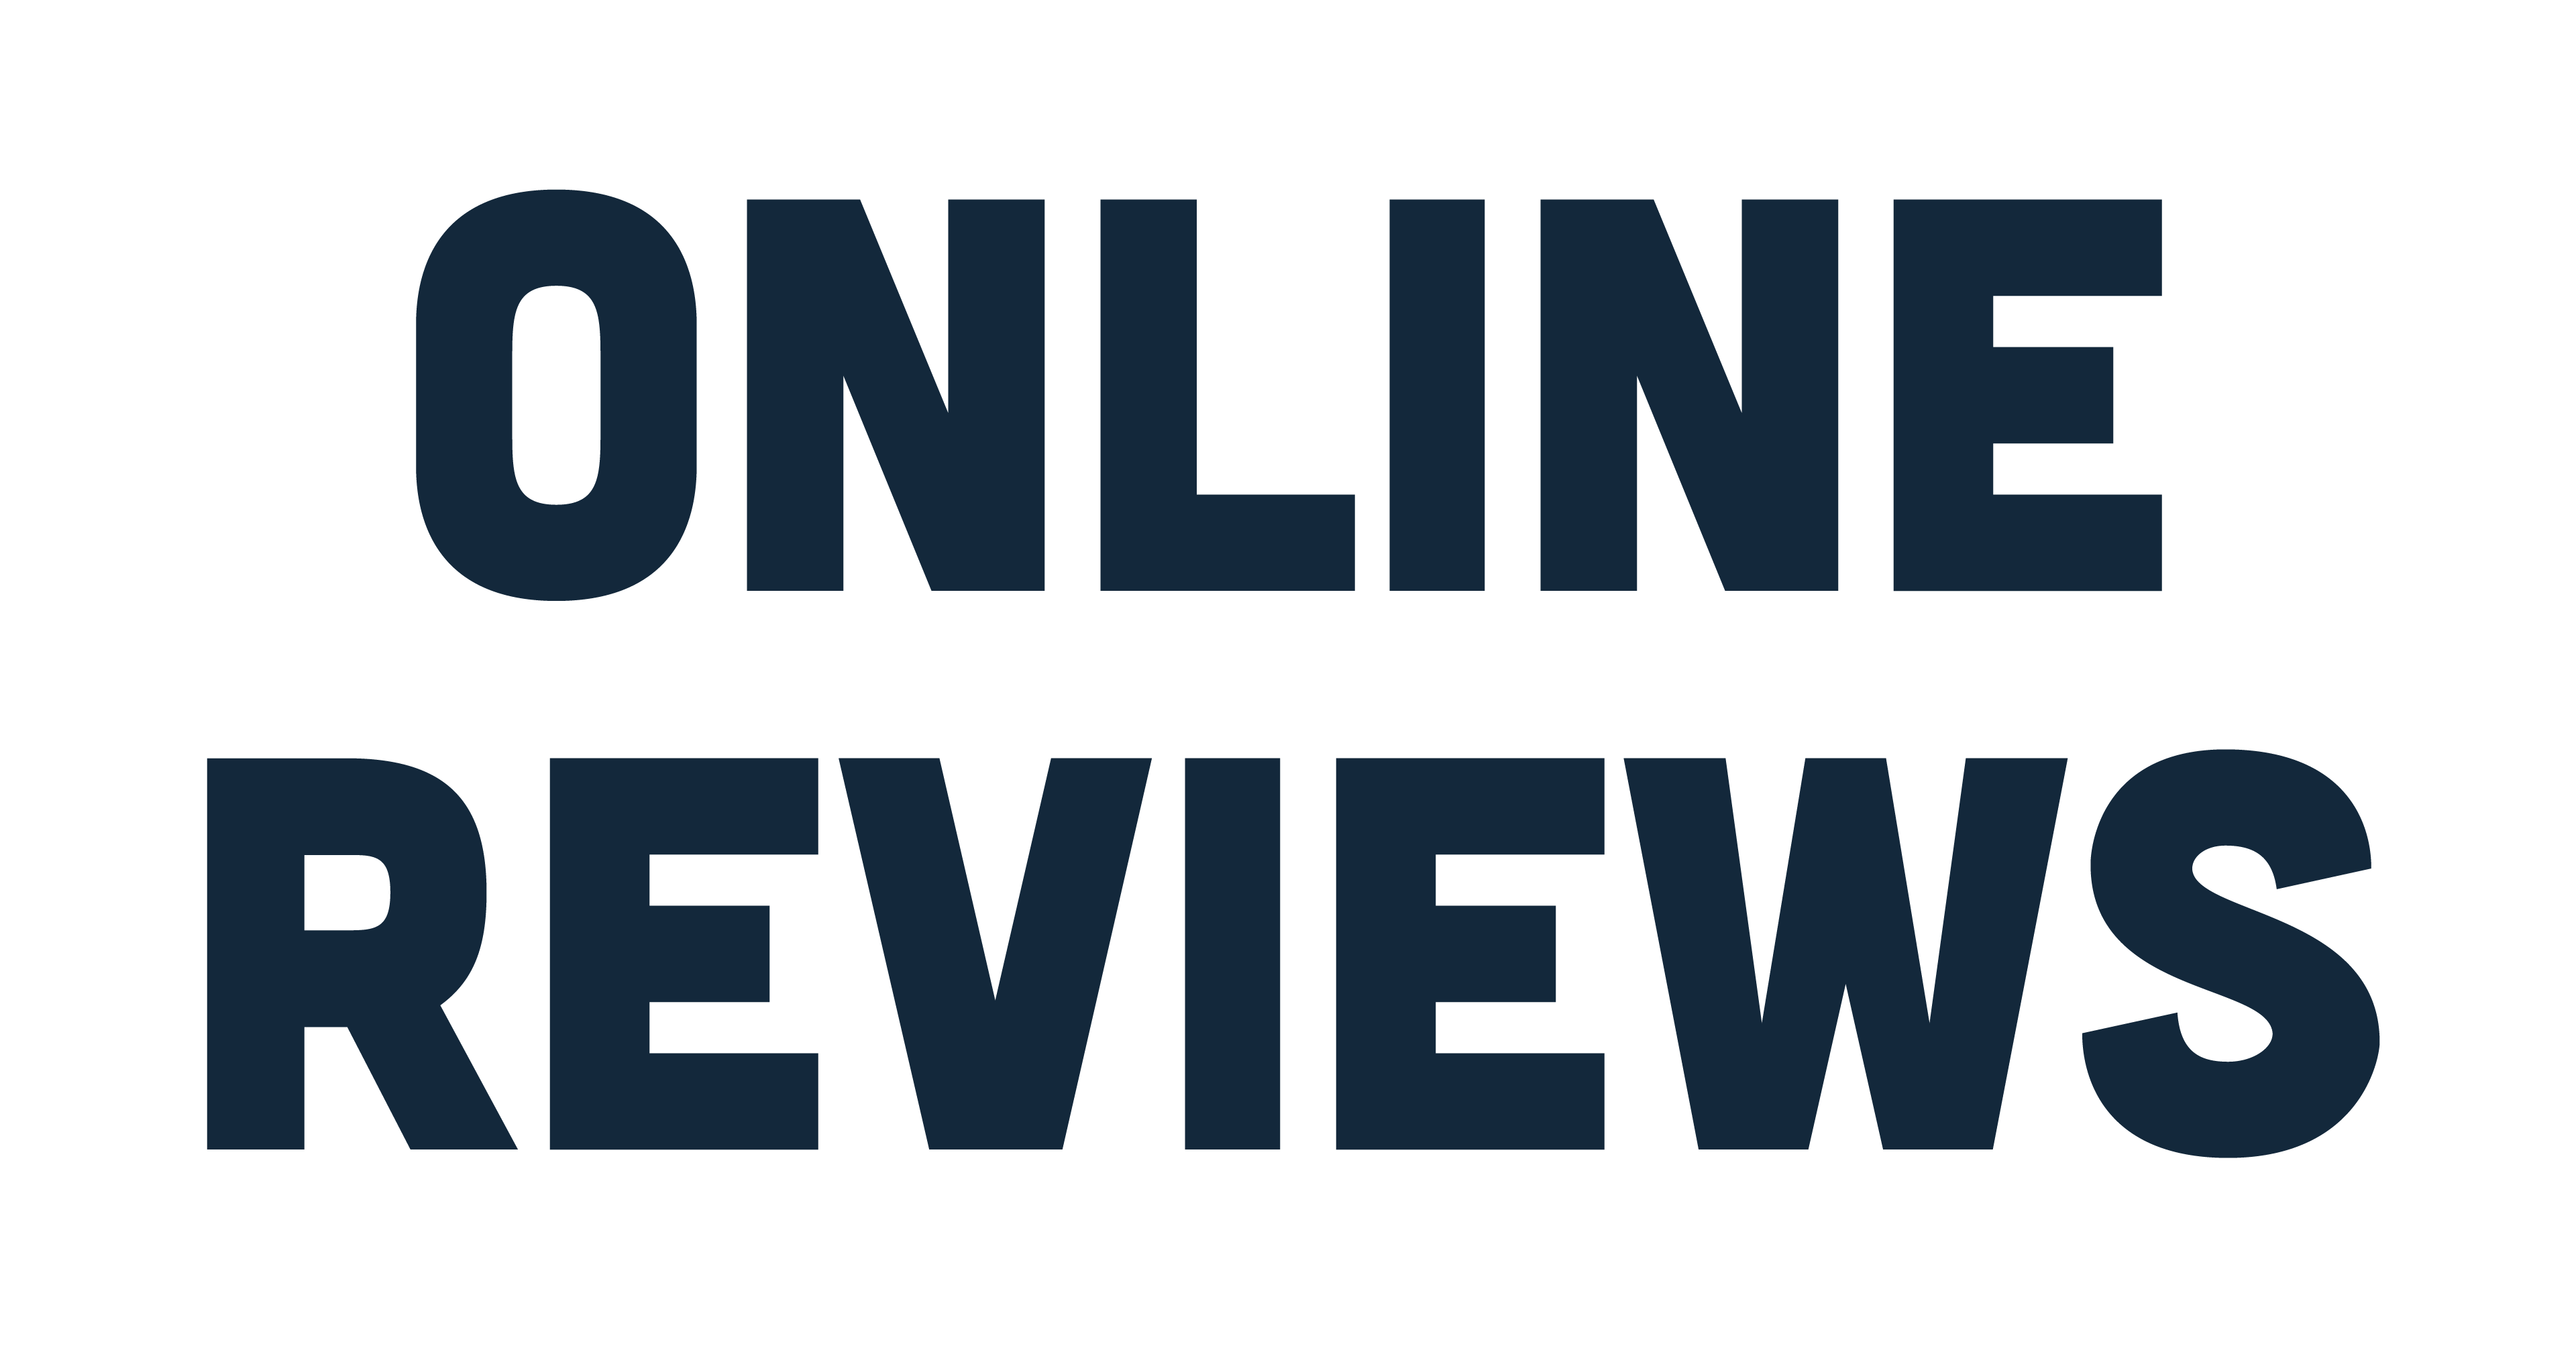 Online Reviews